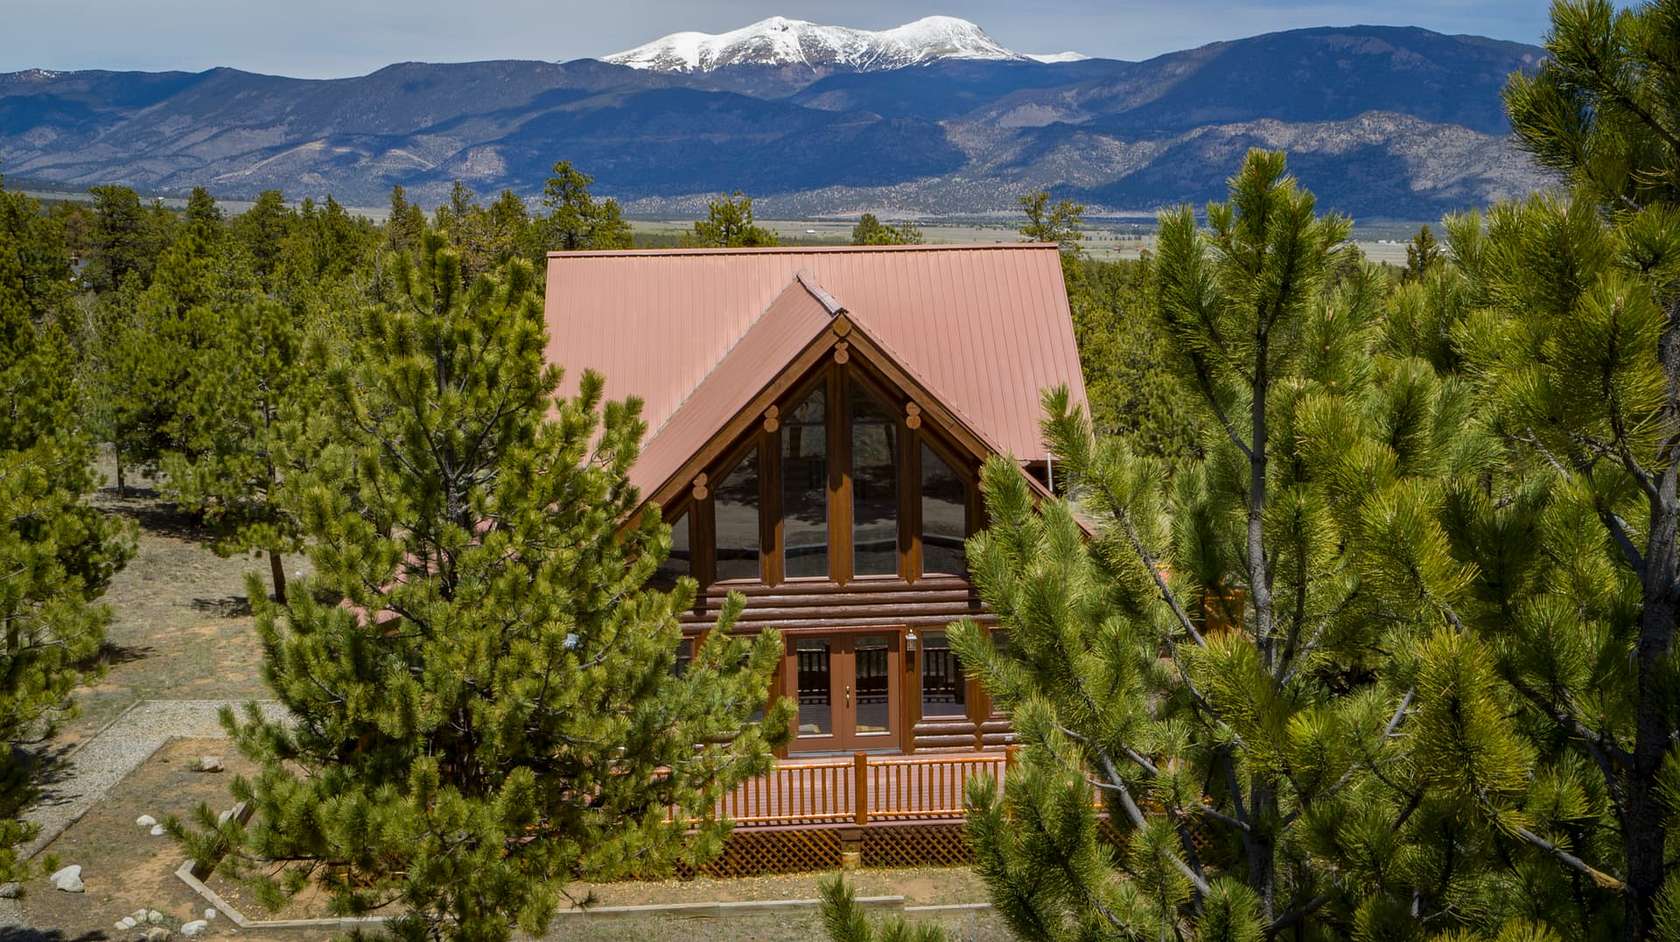 3.6 Acres of Land with Home for Sale in Buena Vista, Colorado